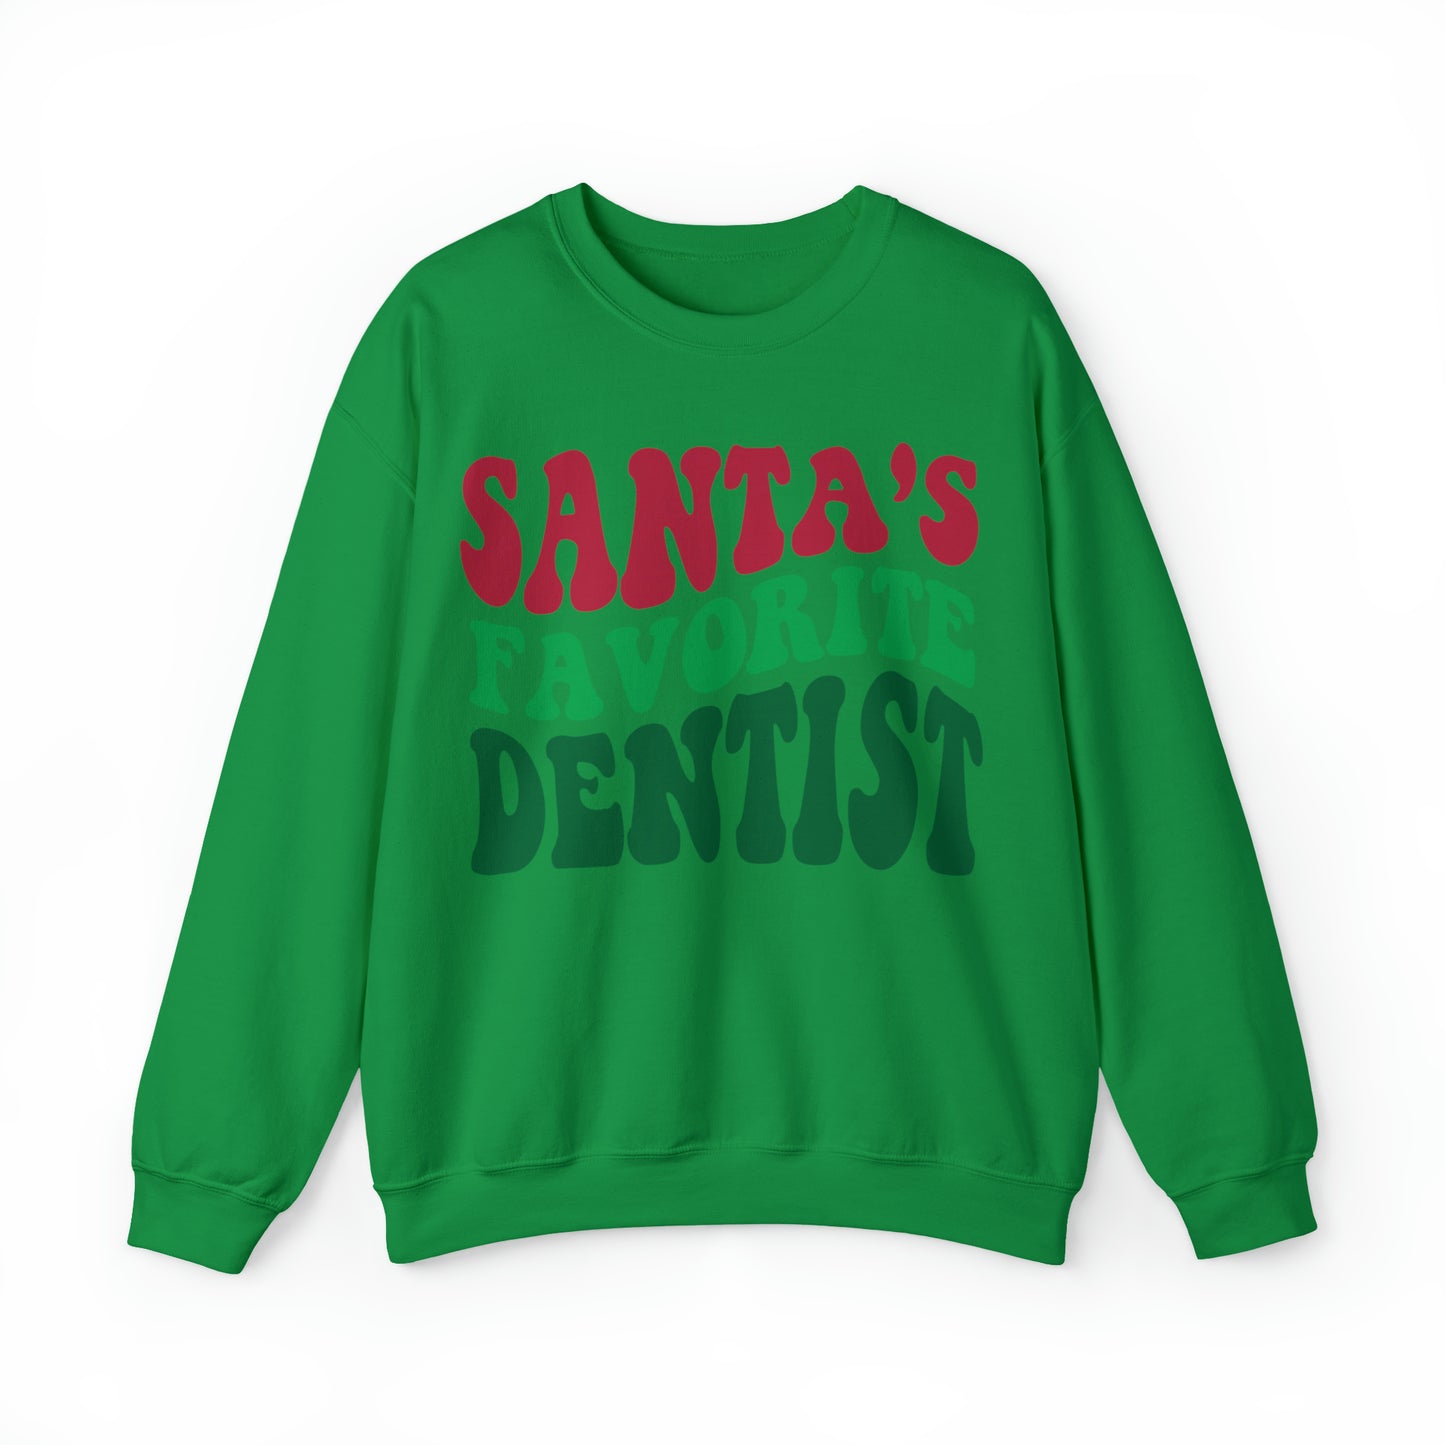 Santas Favorite Dentist Sweatshirt,  Sweatshirt, Unisex Heavy Blend Sweater, Gift for dentist, Christmas gift, dental team gift